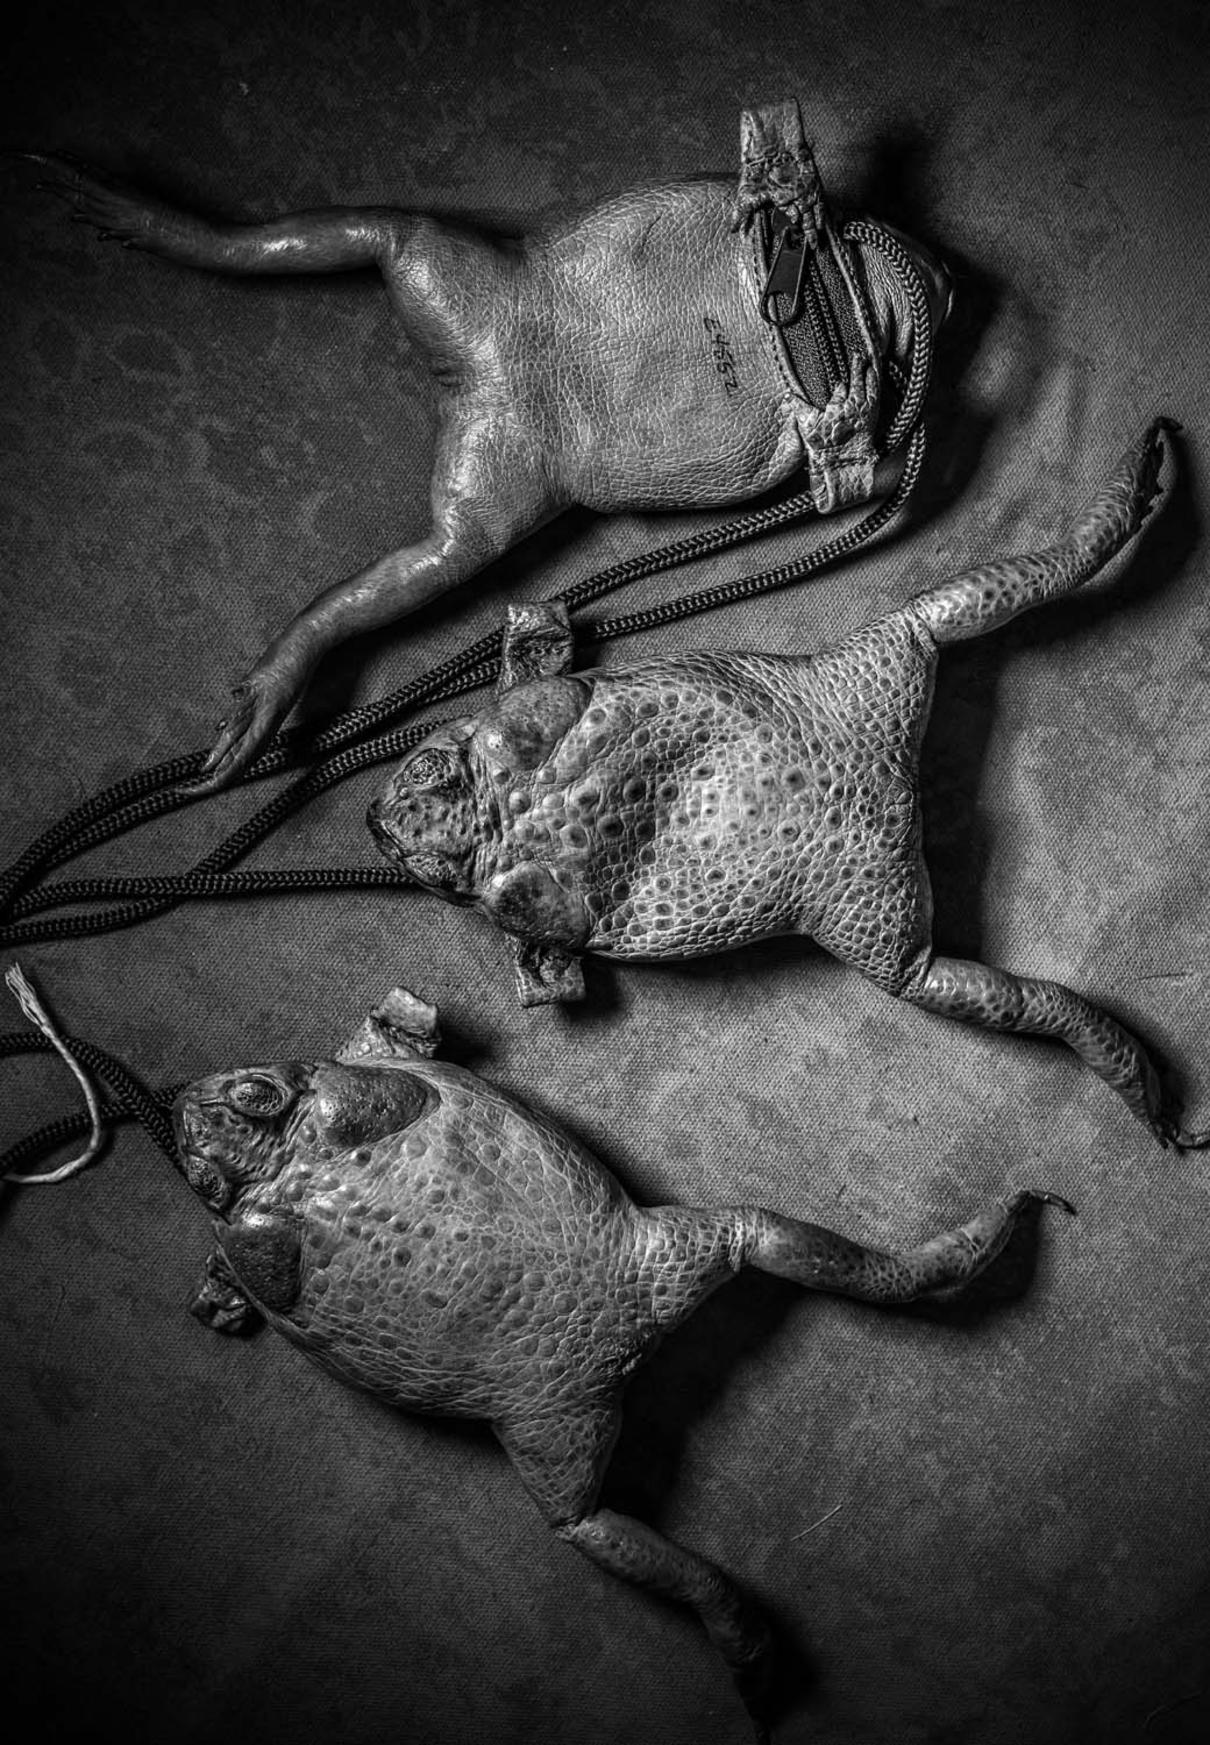 Britta Jaschinski (GB) | Morbide Modeartikel | Dead toad fashion